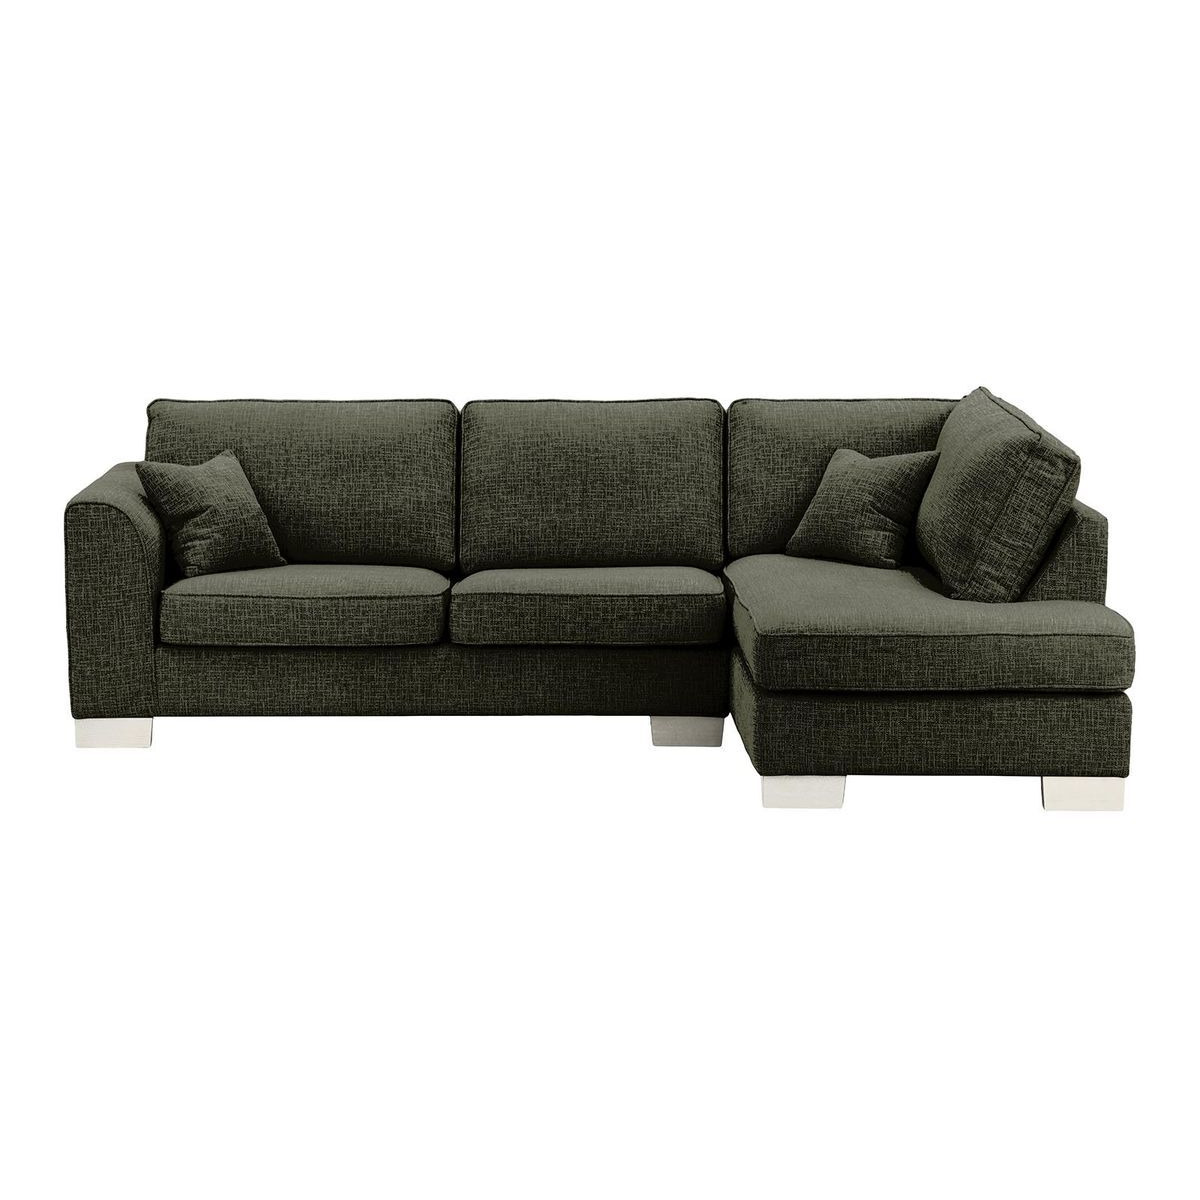 Avos Large Right Hand Corner Sofa, mid grey, Leg colour: white - image 1